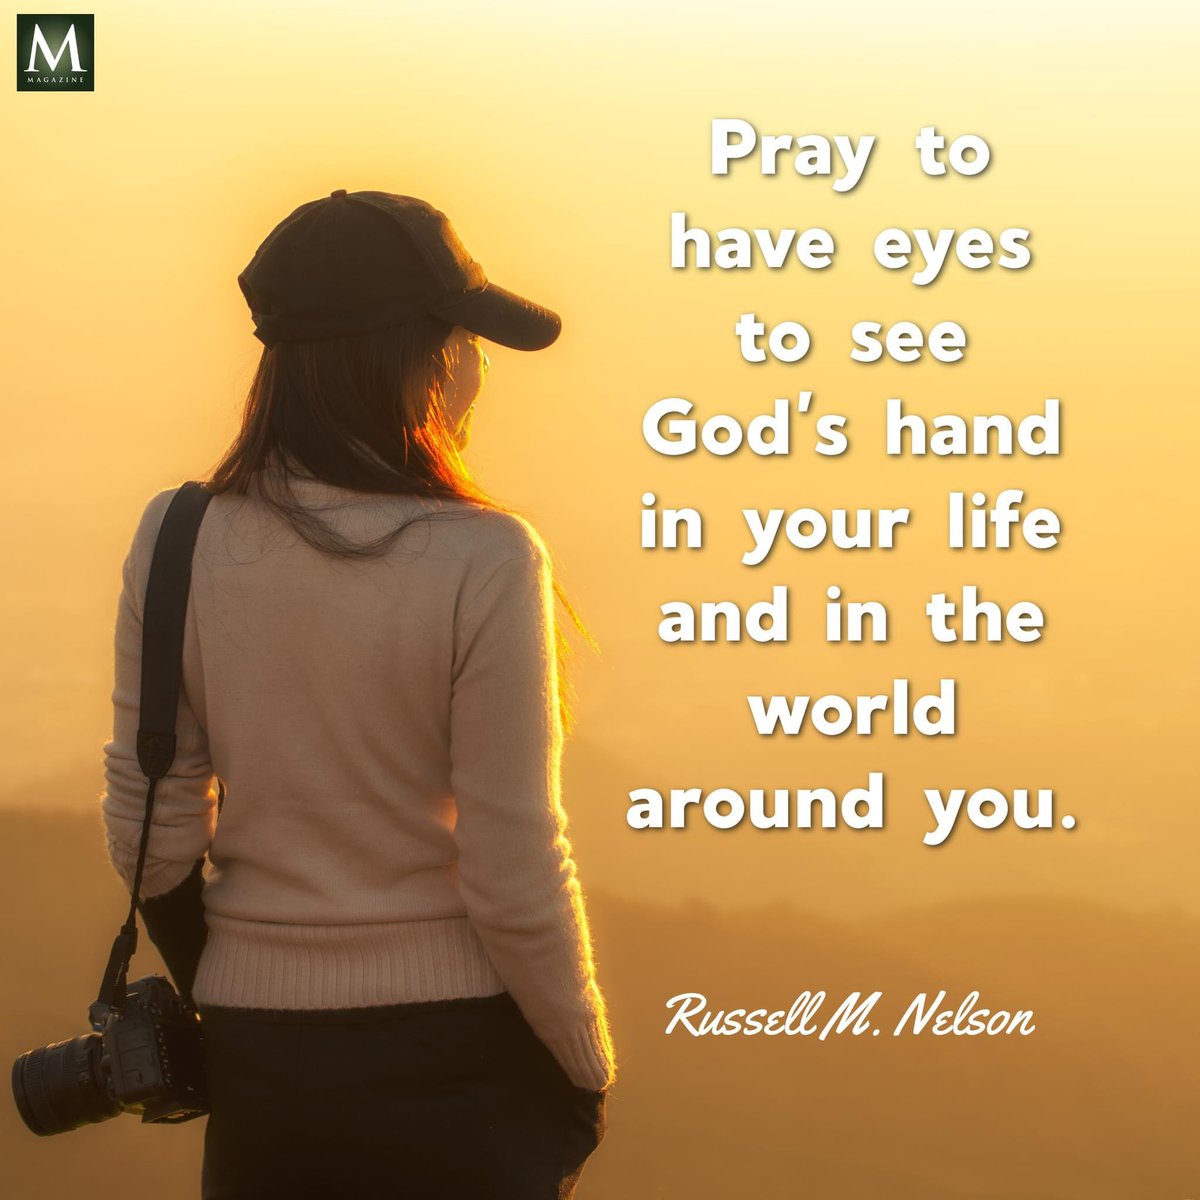 “Pray to have eyes to see God’s hand in your life and in the world around you.” ~ President Russell M. Nelson

#PowerOfPrayer #HearHim #TrustGod #GodLovesYou #ComeUntoChrist #CountOnHim #EmbraceHim #ChildOfGod #ShareGoodness #TheChurchOfJesusChristOfLatterDaySaints